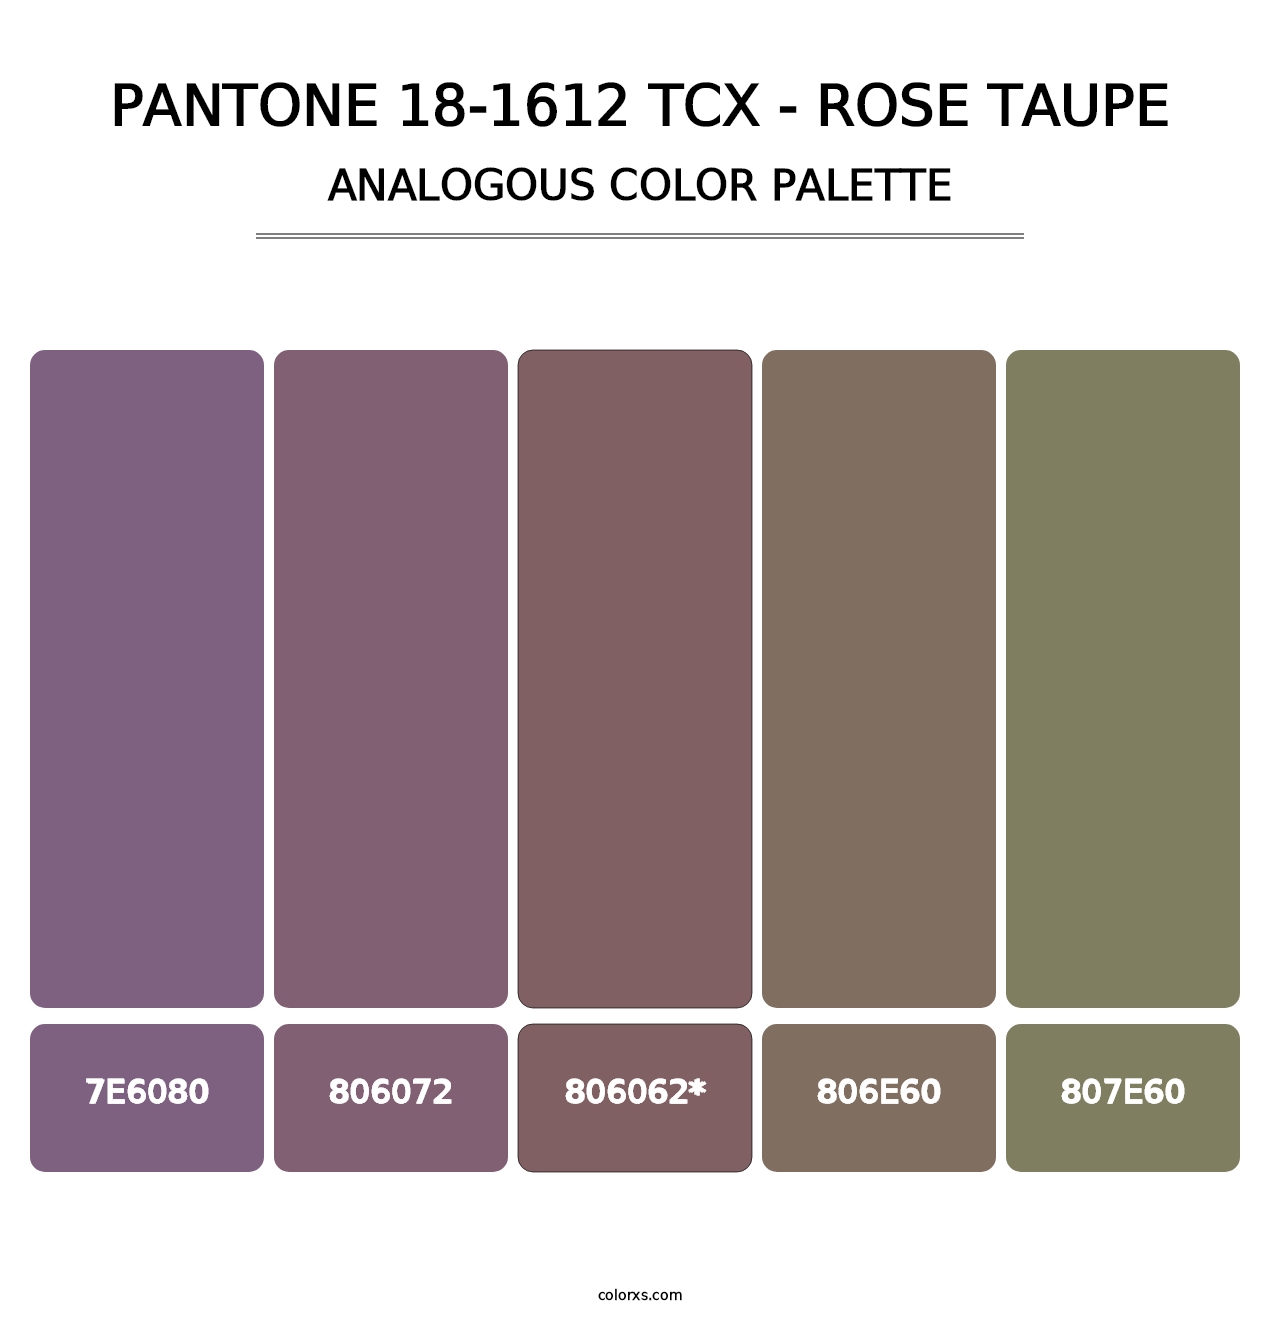 PANTONE 18-1612 TCX - Rose Taupe - Analogous Color Palette